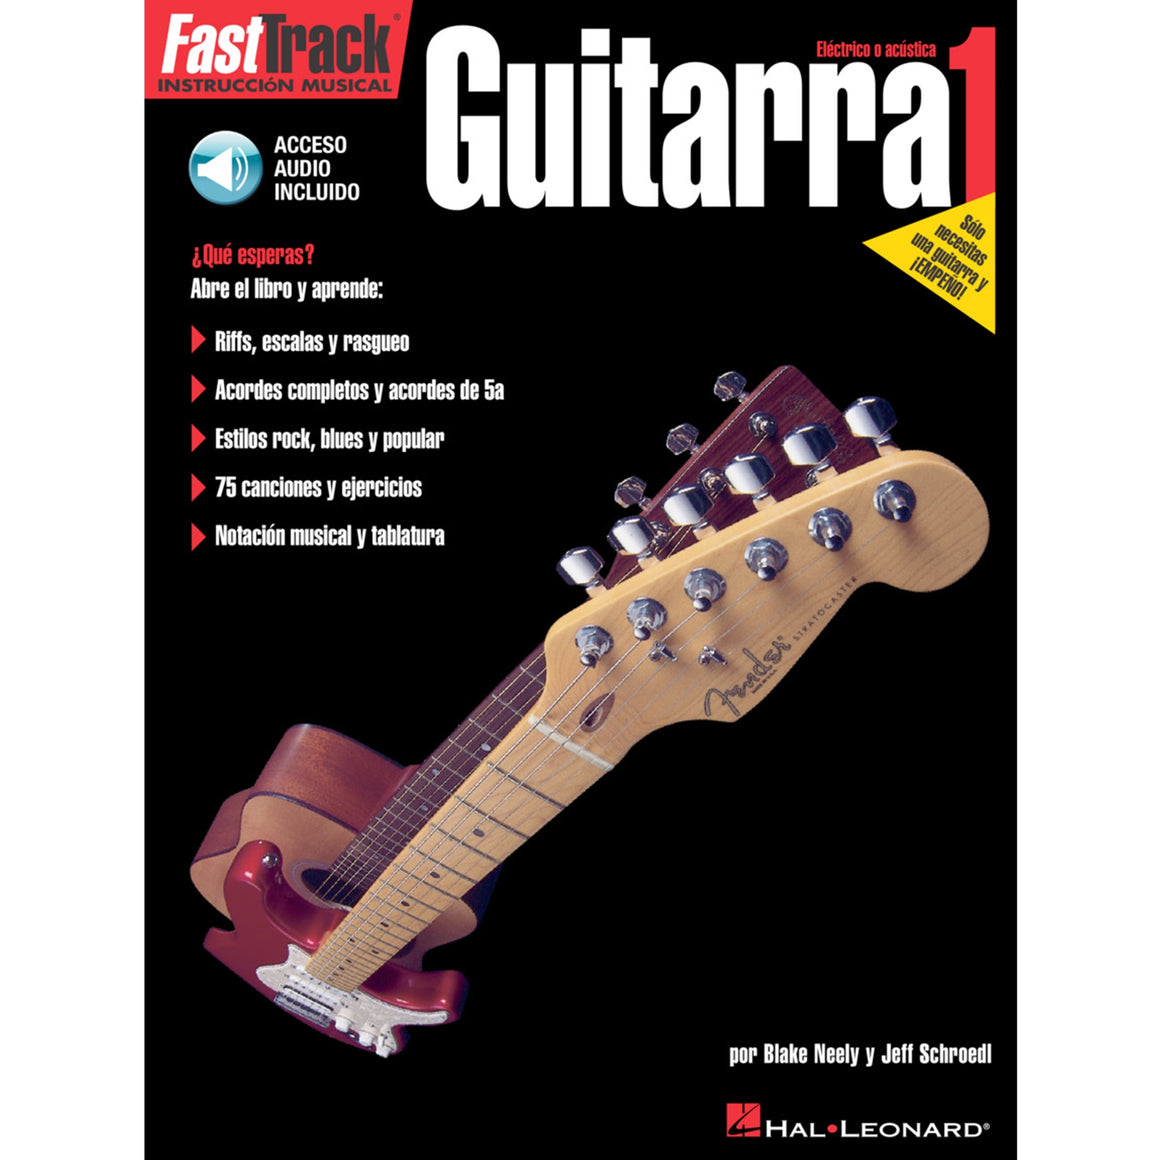 HAL LEONARD 695593 FastTrack Guitar Method - Spanish Edition - Level 1